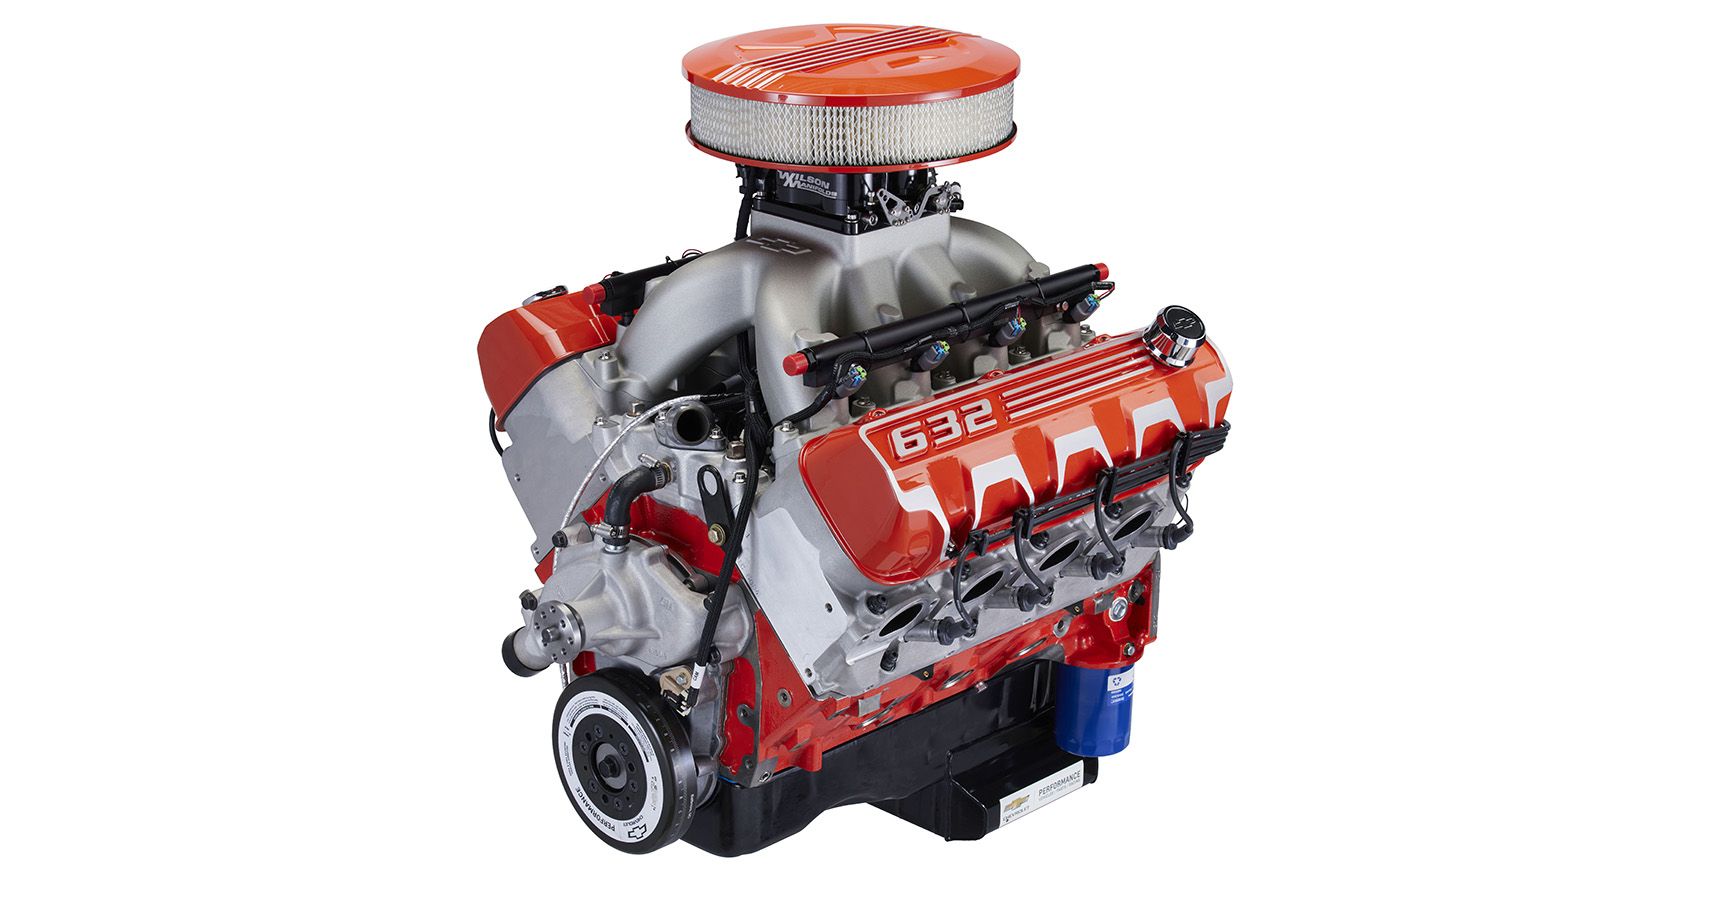 Chevrolet Performance ZZ632 crate engine